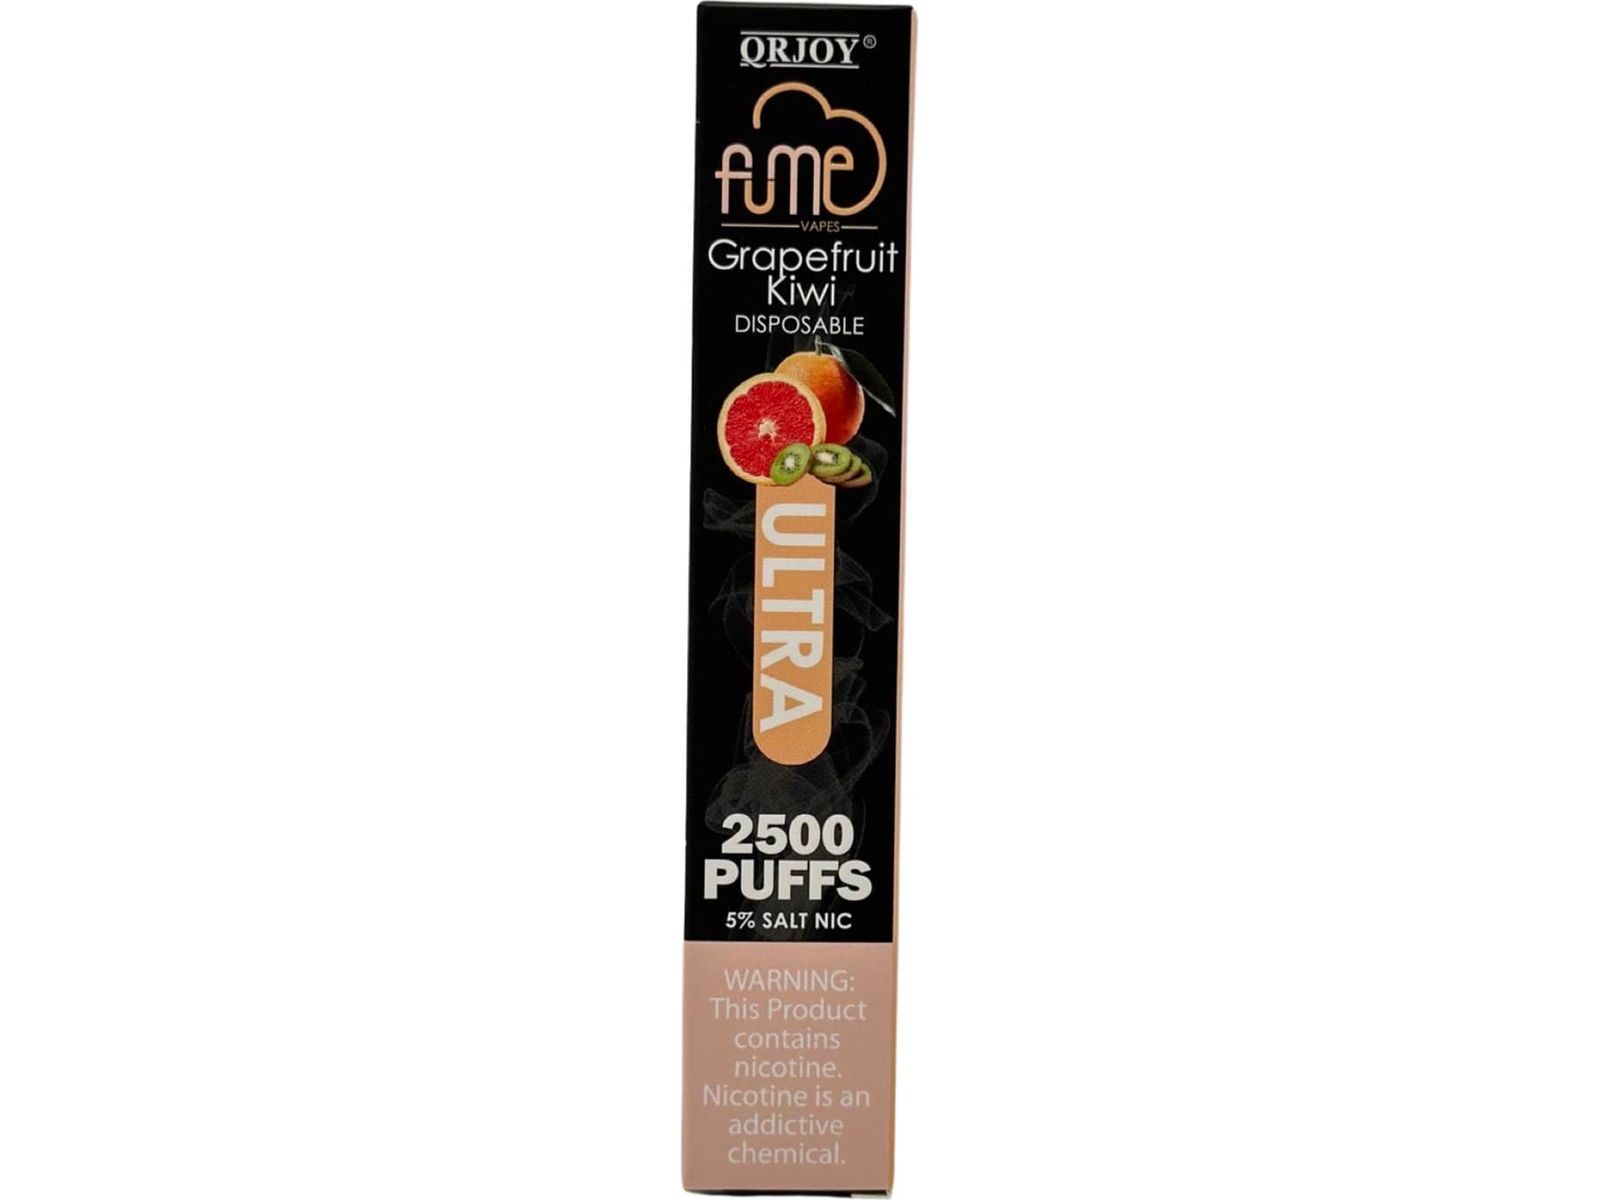 Fume Ultra Front Packaging - Grapefruit Kiwi